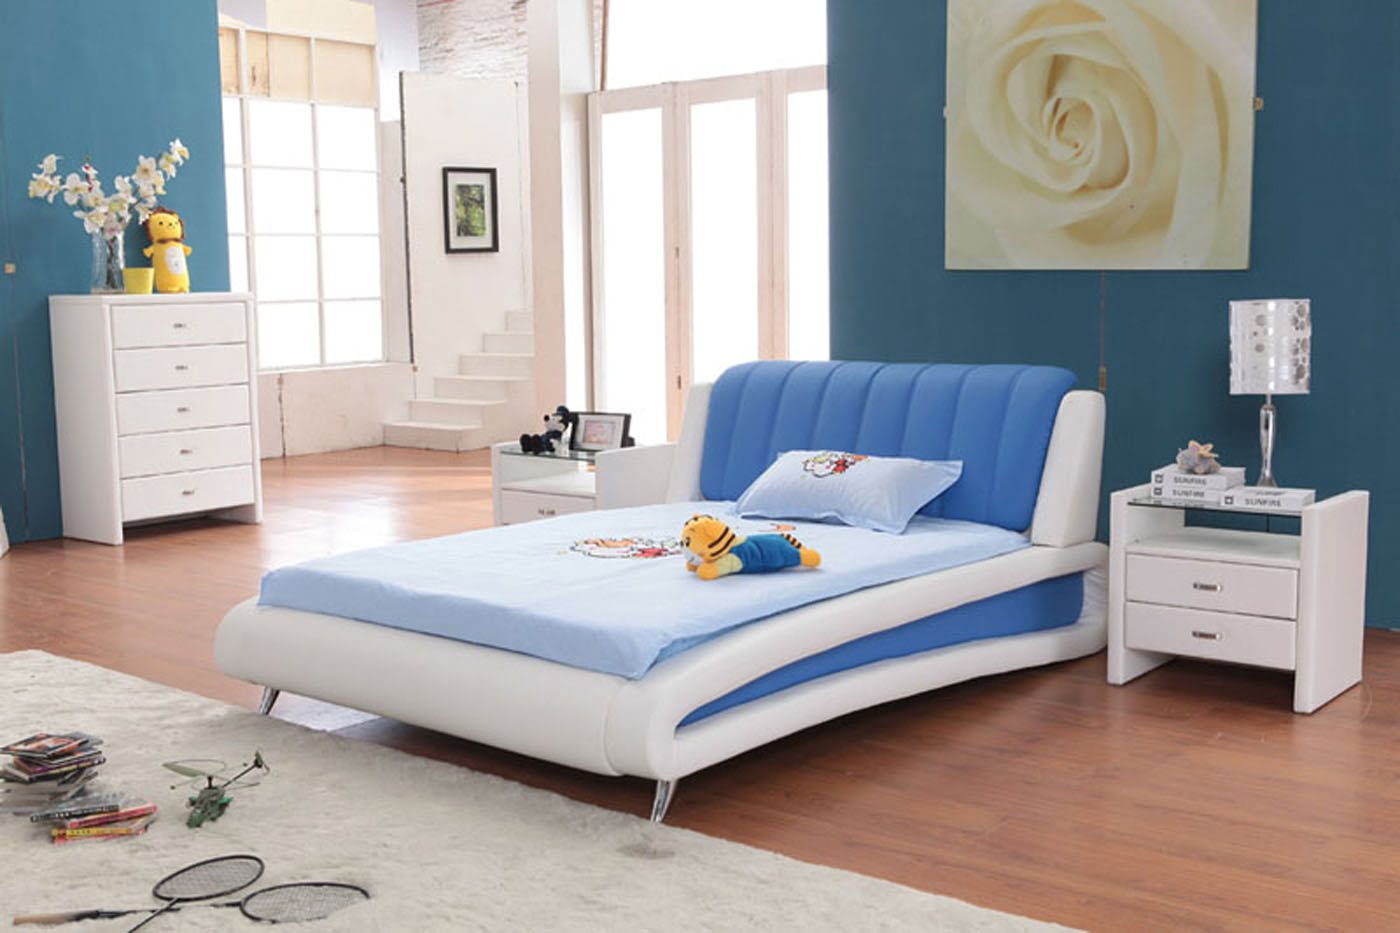 51 New Dekorasi Kamar Tidur Sederhana Warna Biru Paling Banyak di Cari